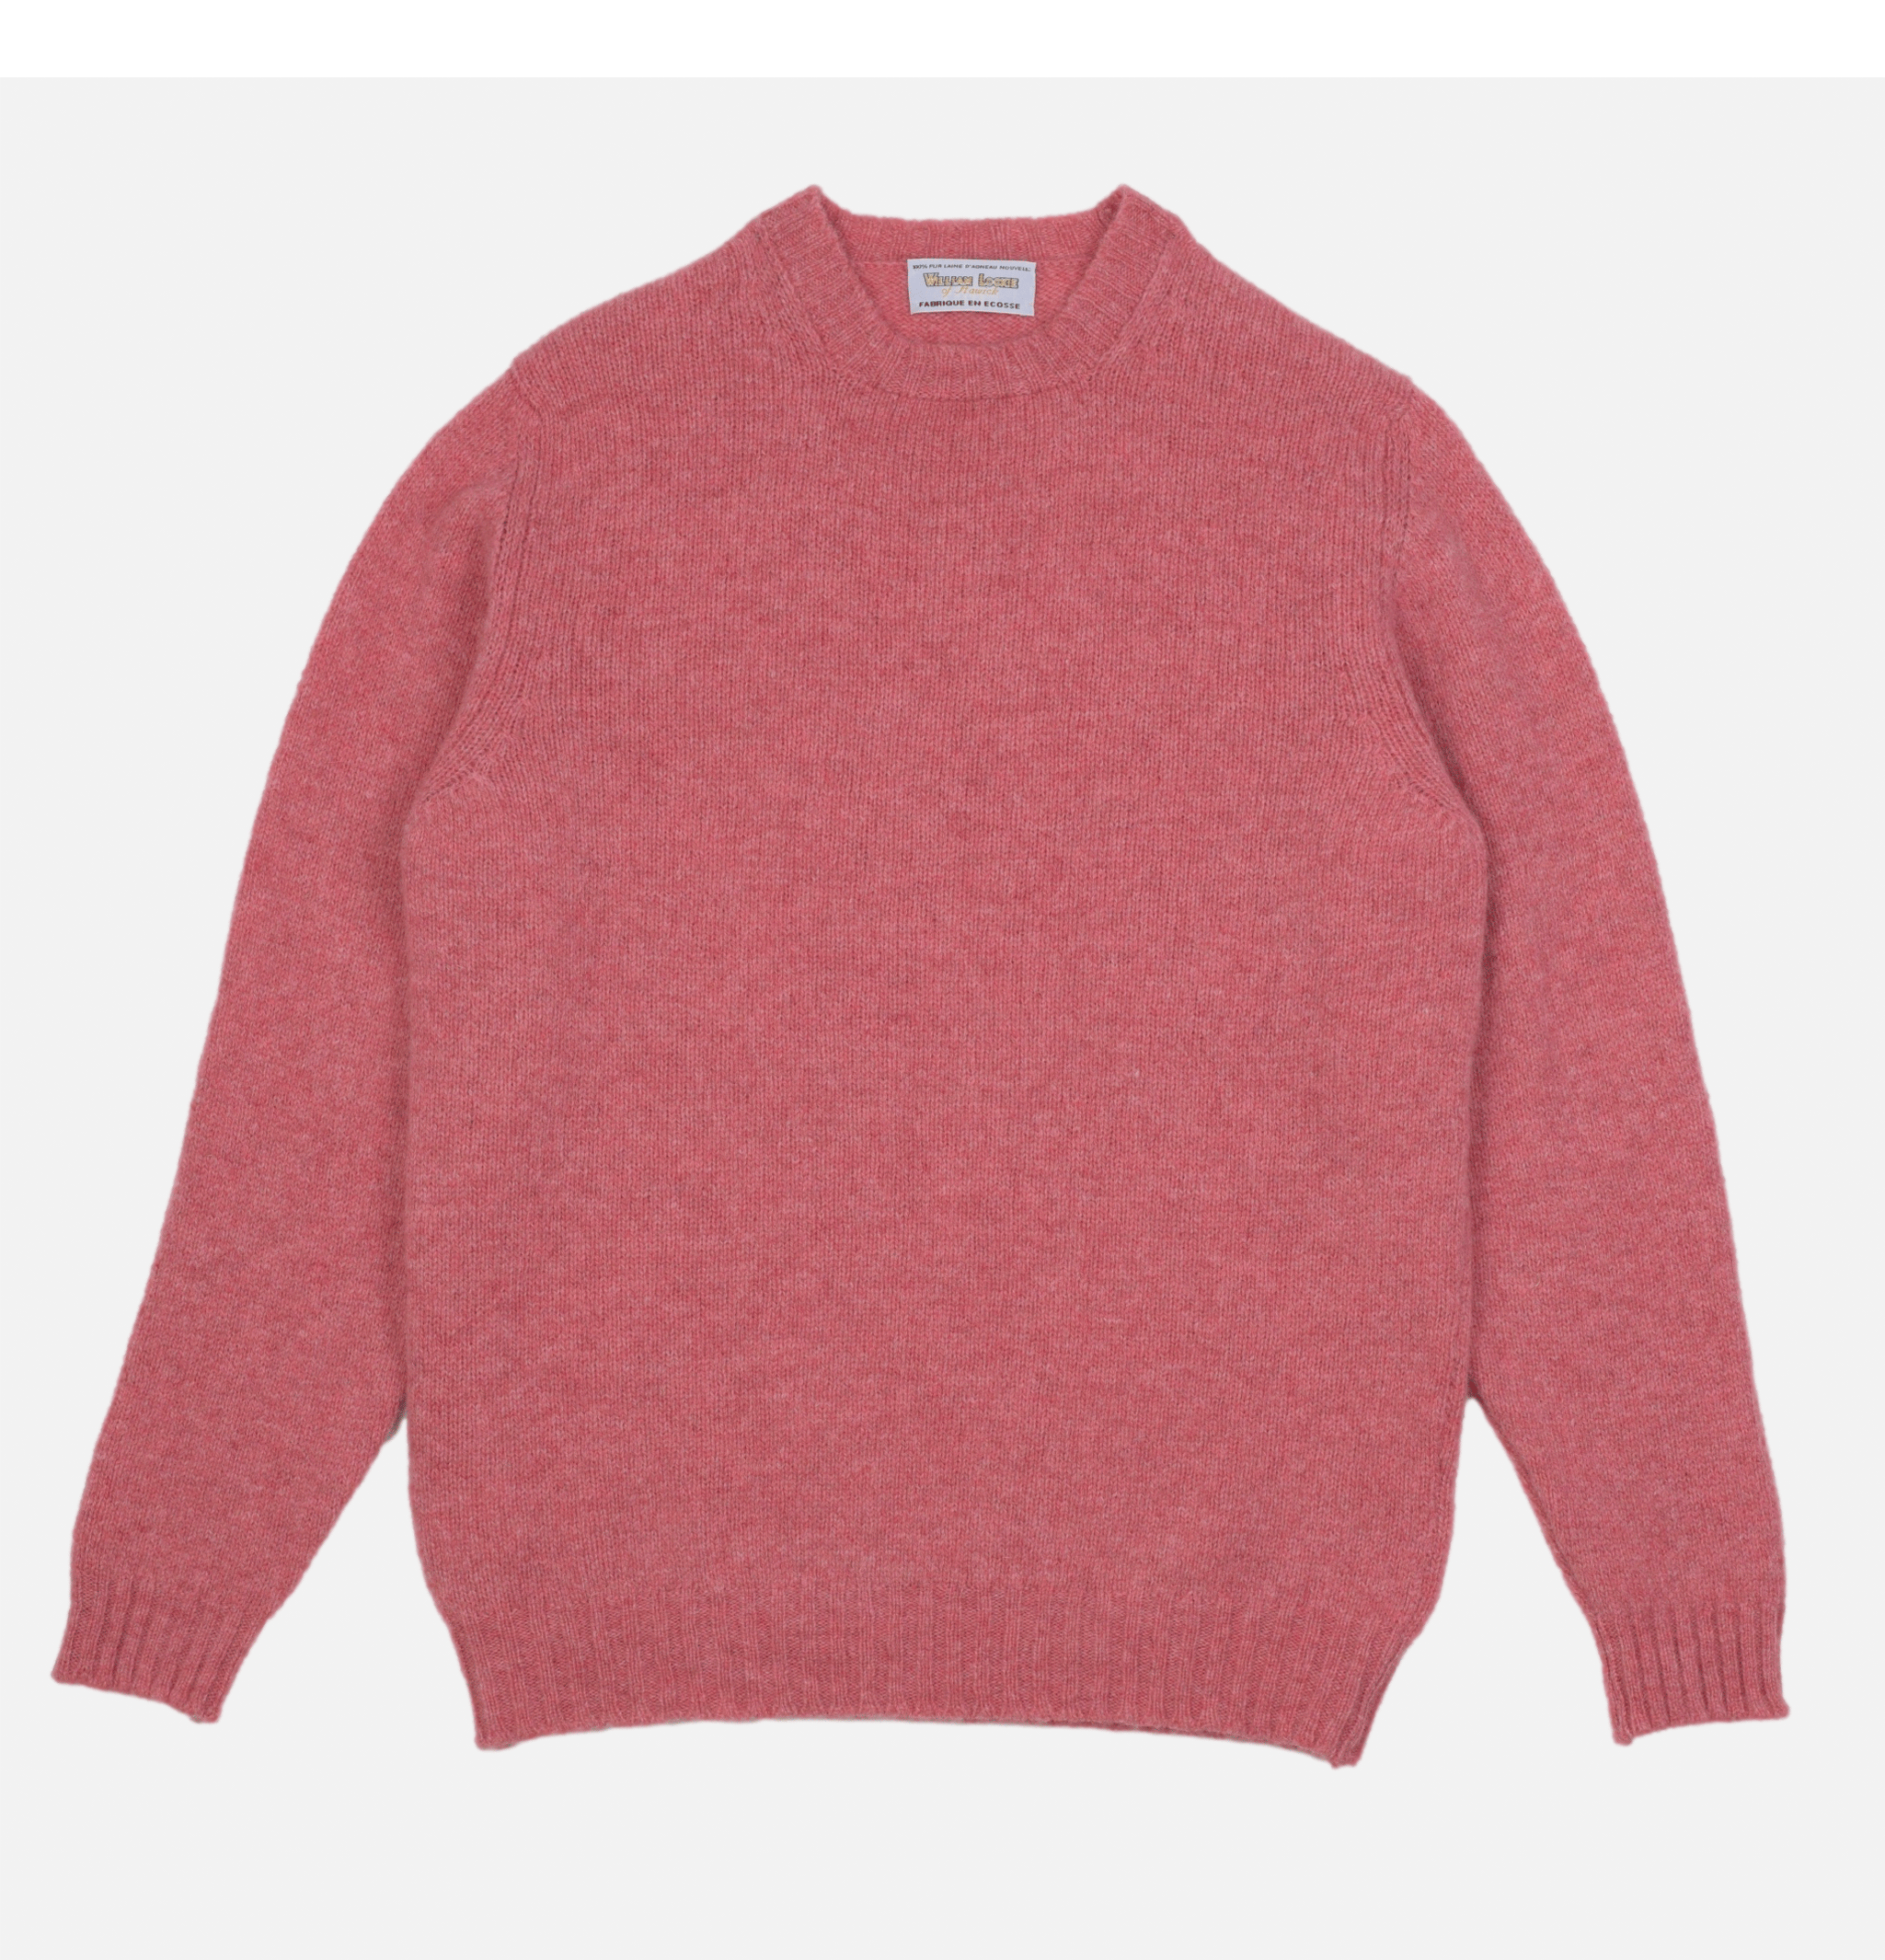 William Lockie Aryan Rosebud sweater